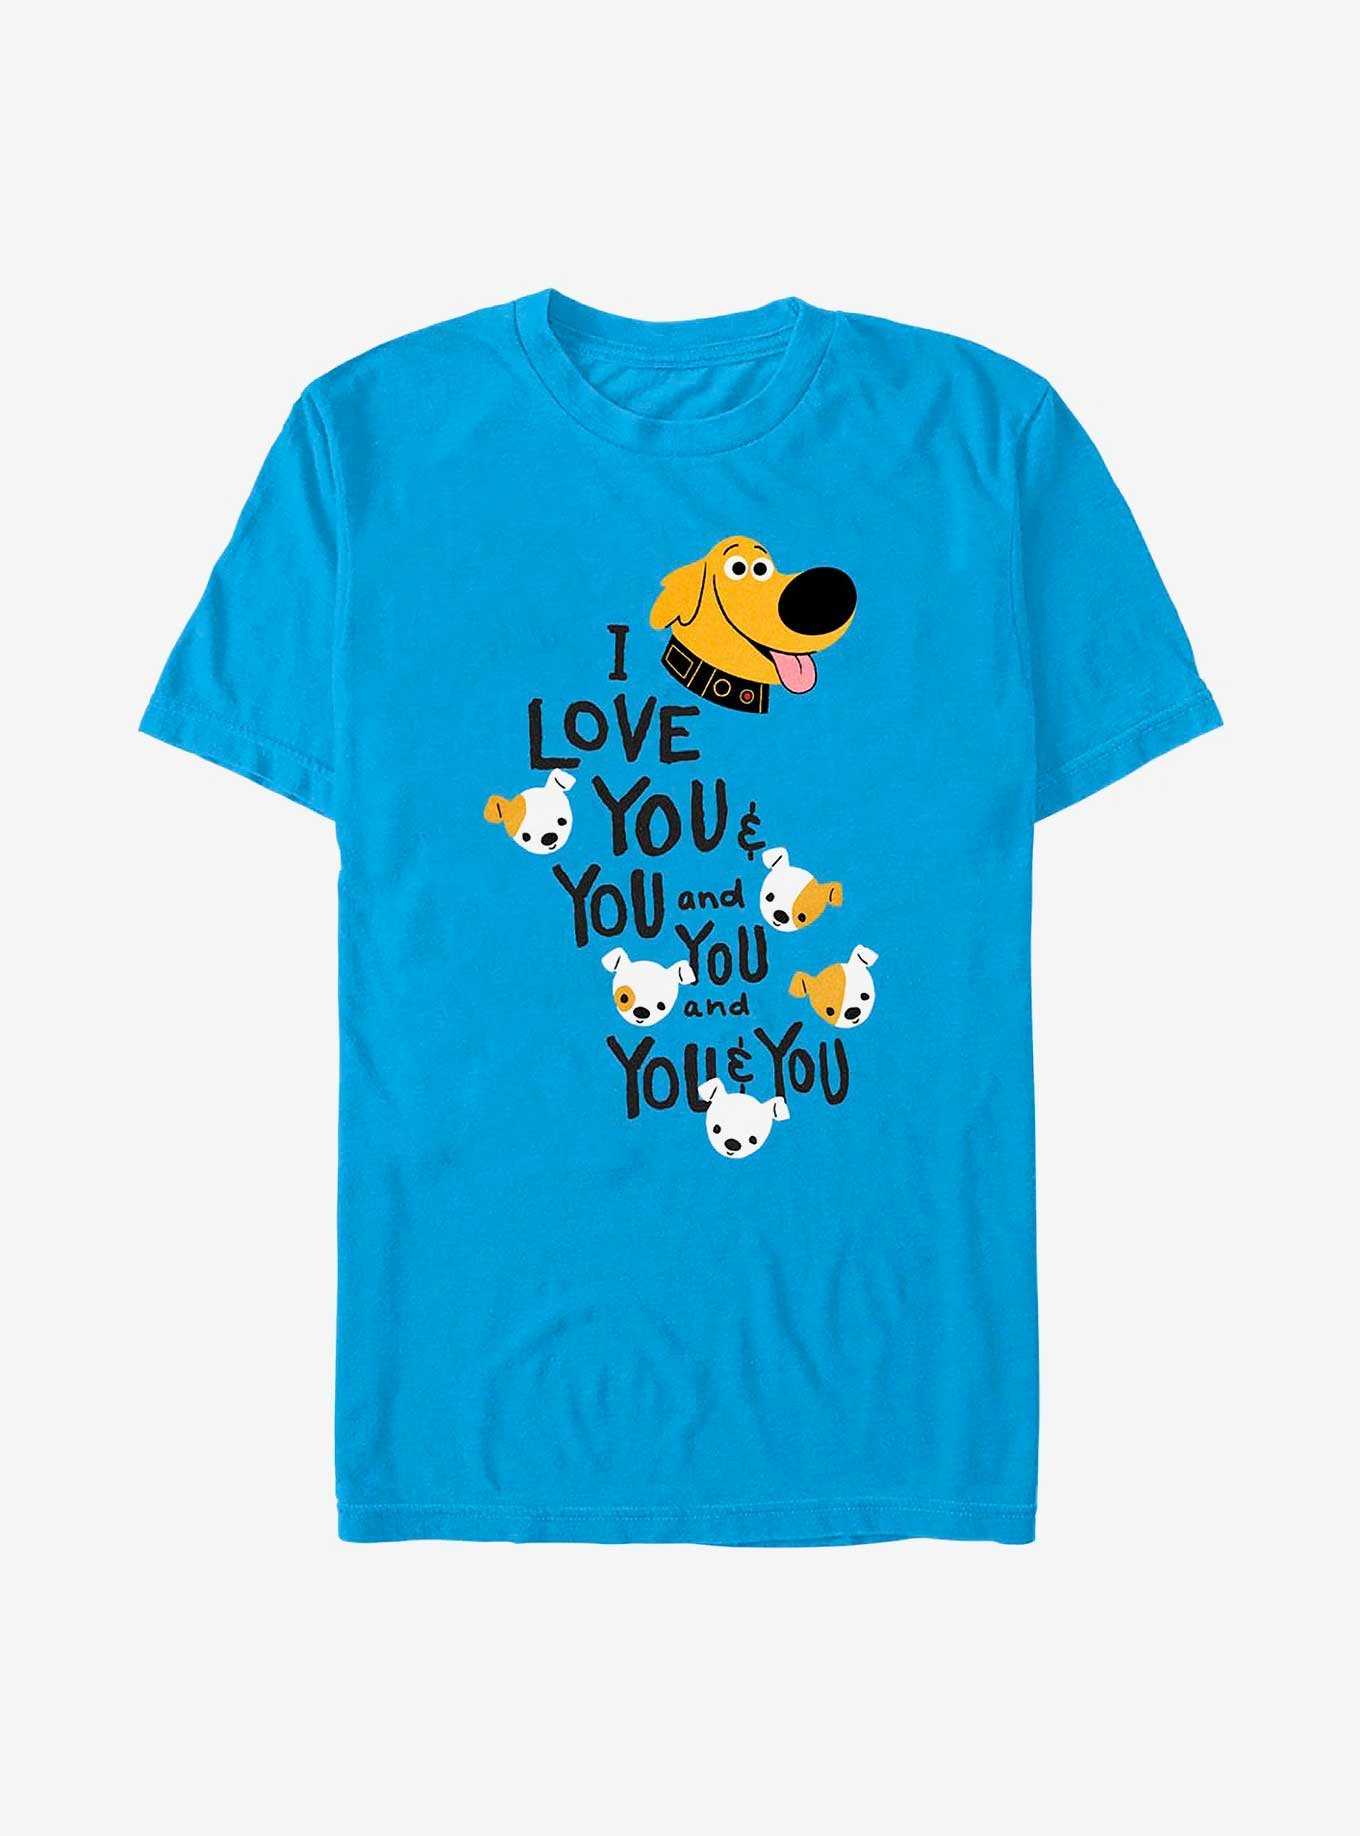 Disney Pixar Up Dug Loves You and You T-Shirt, , hi-res